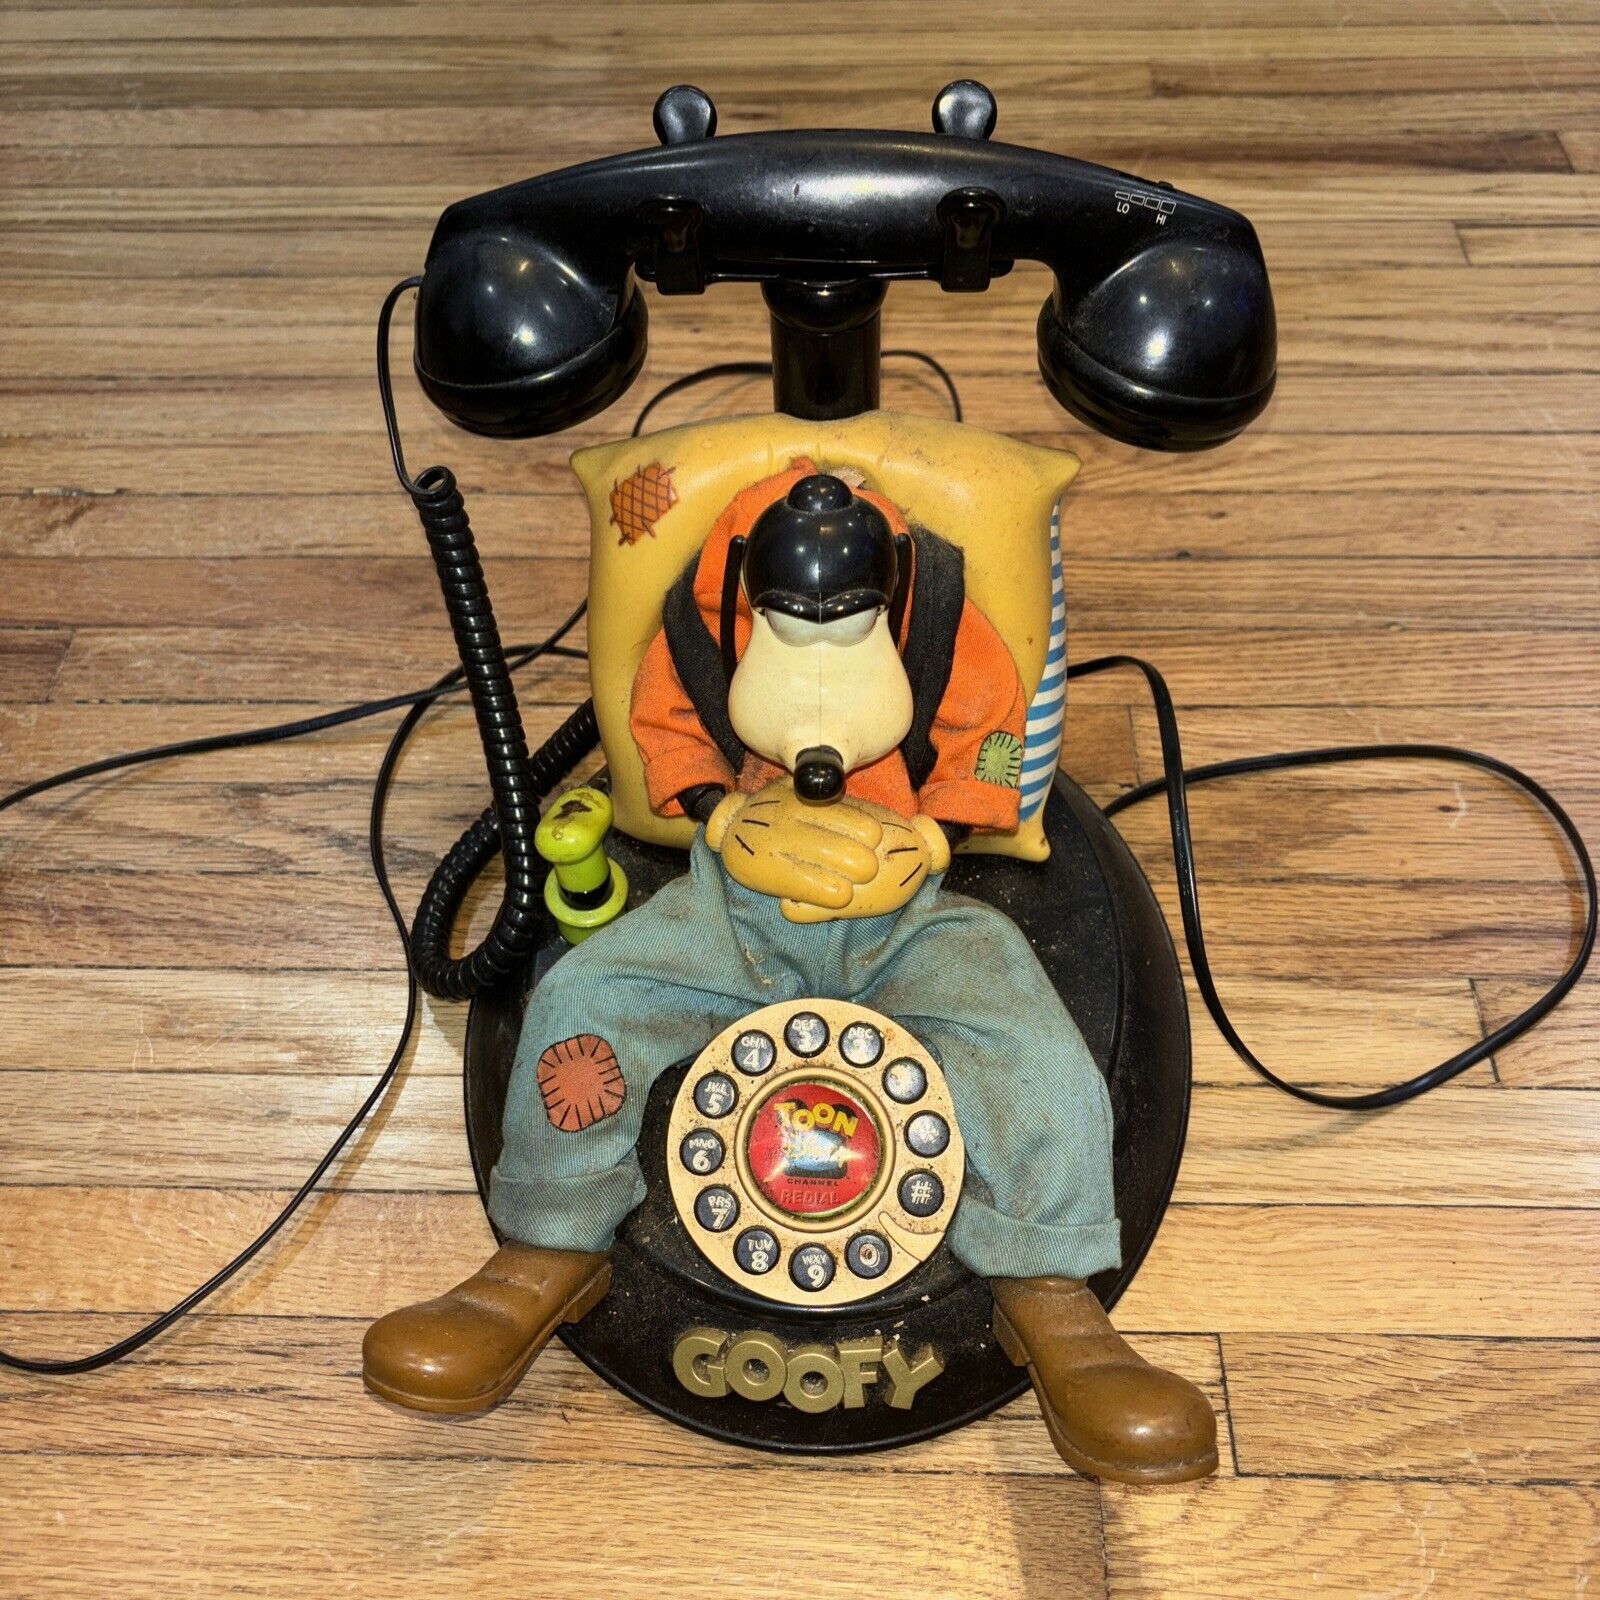 Vintage Goofy Animated Talking Telephone Disney untested